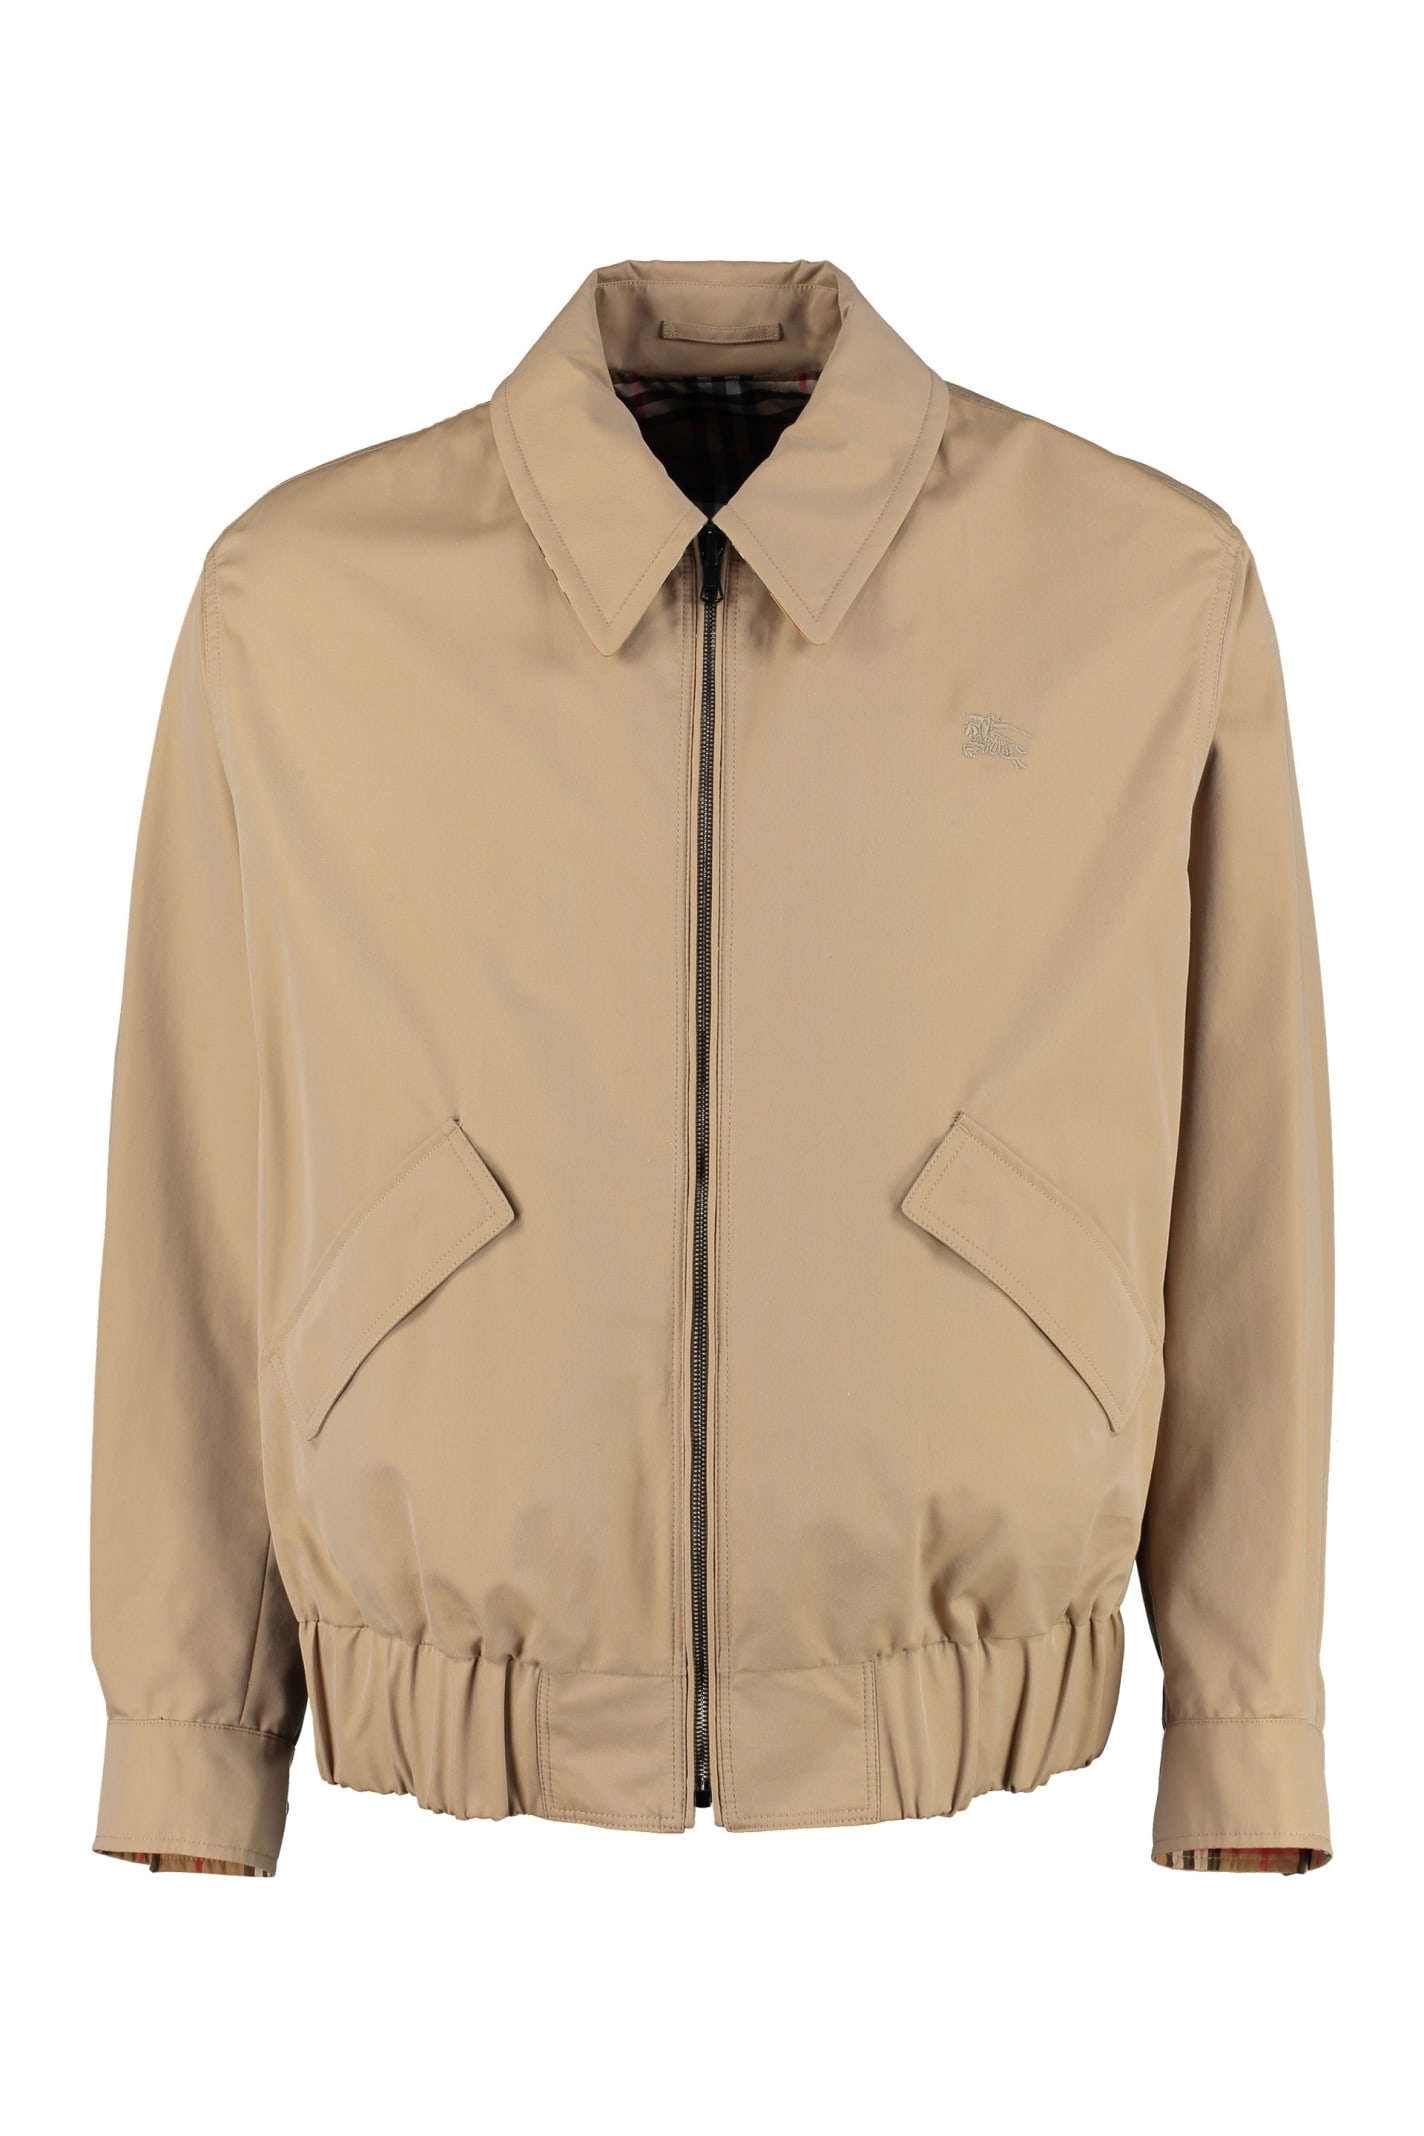 burberry harrington jacket beige